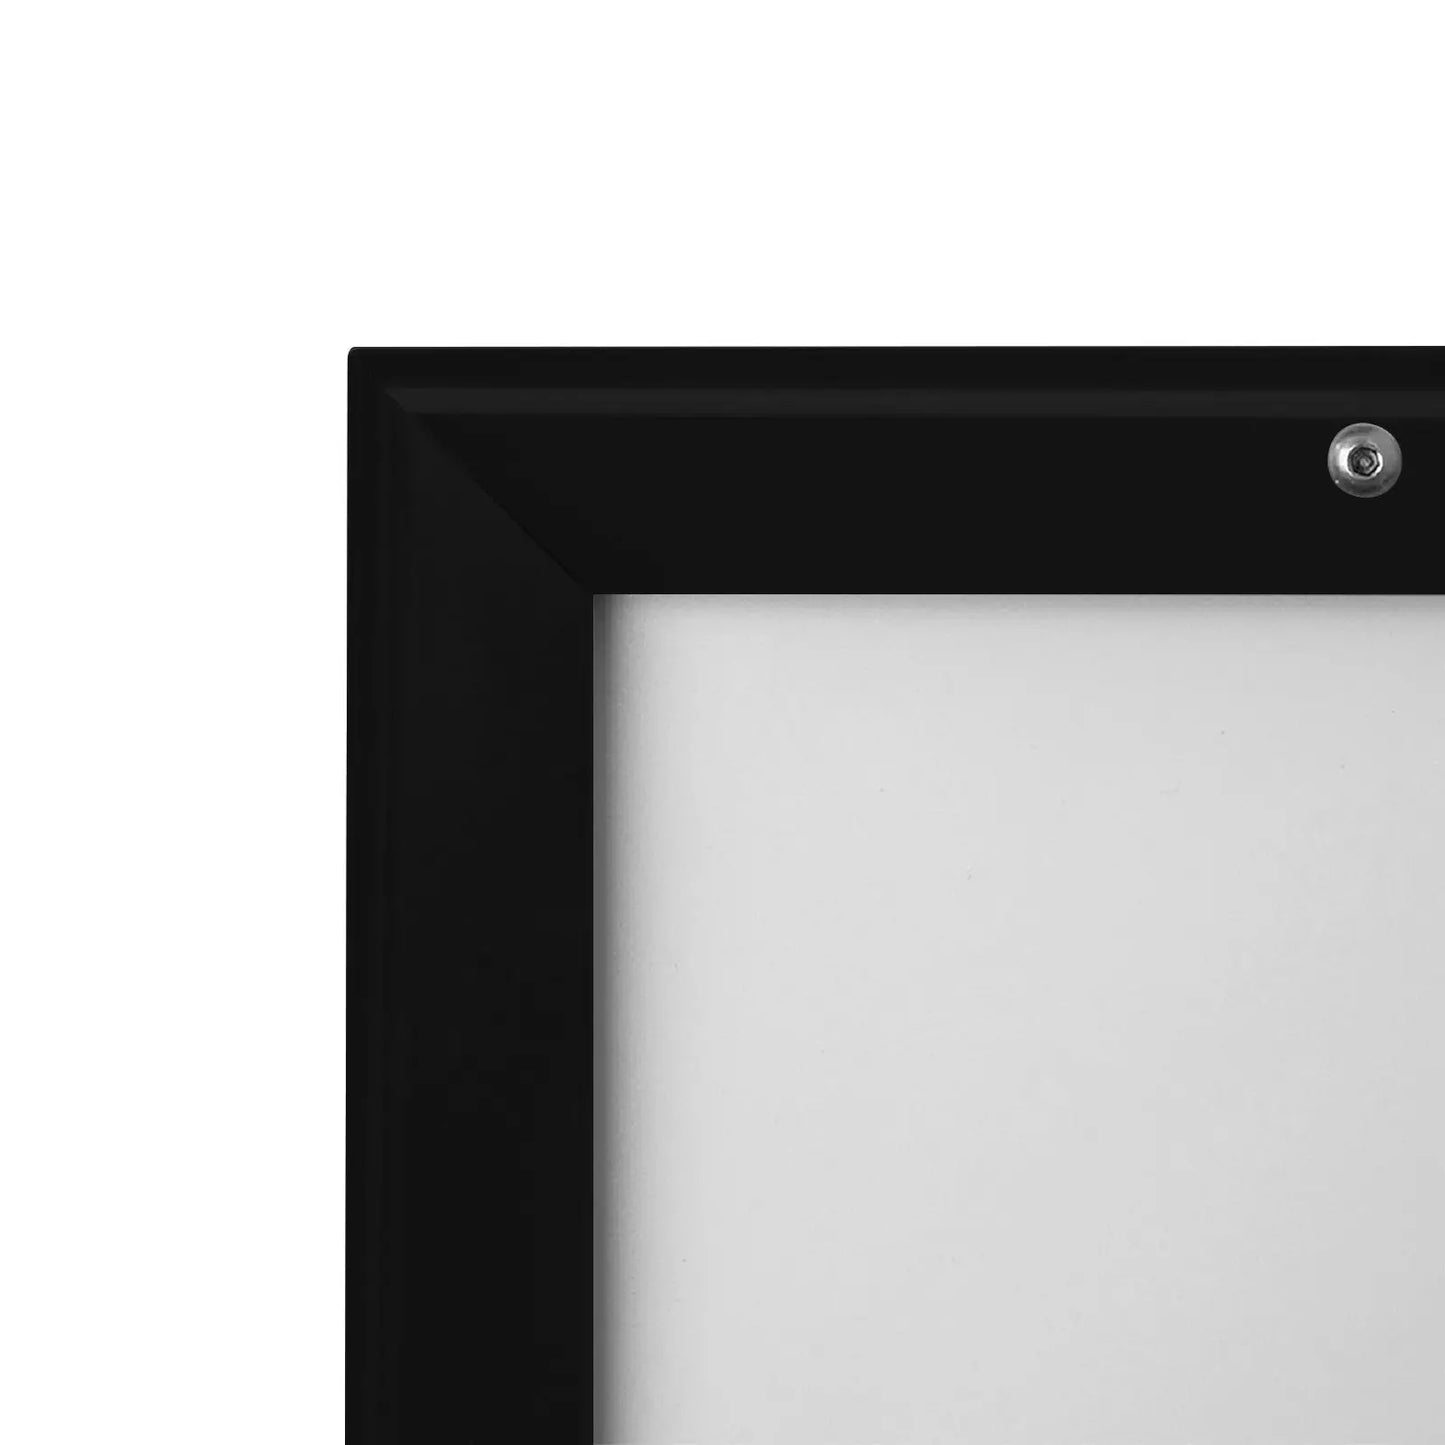 Black locking snap frame poster size 16X20 - 1.25 inch profile - Snap Frames Direct